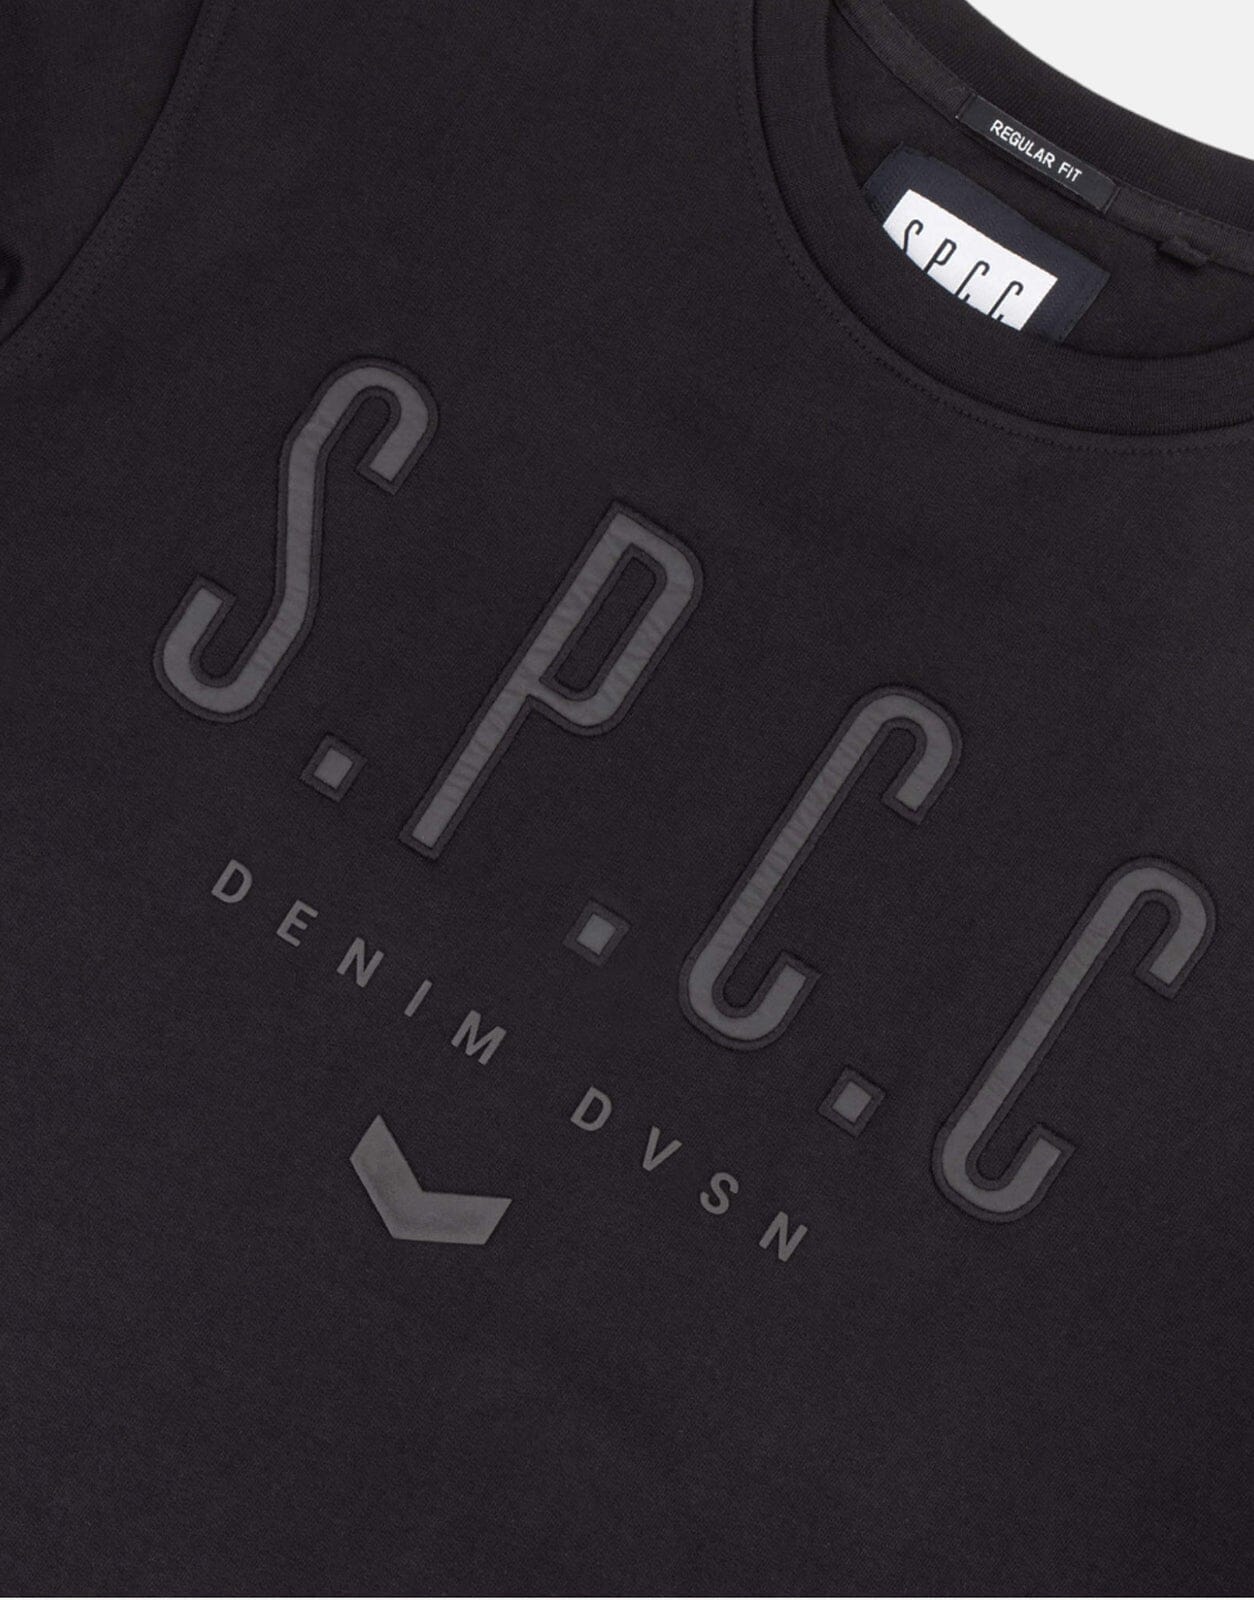 SPCC Acker Black Sweatshirt - Subwear